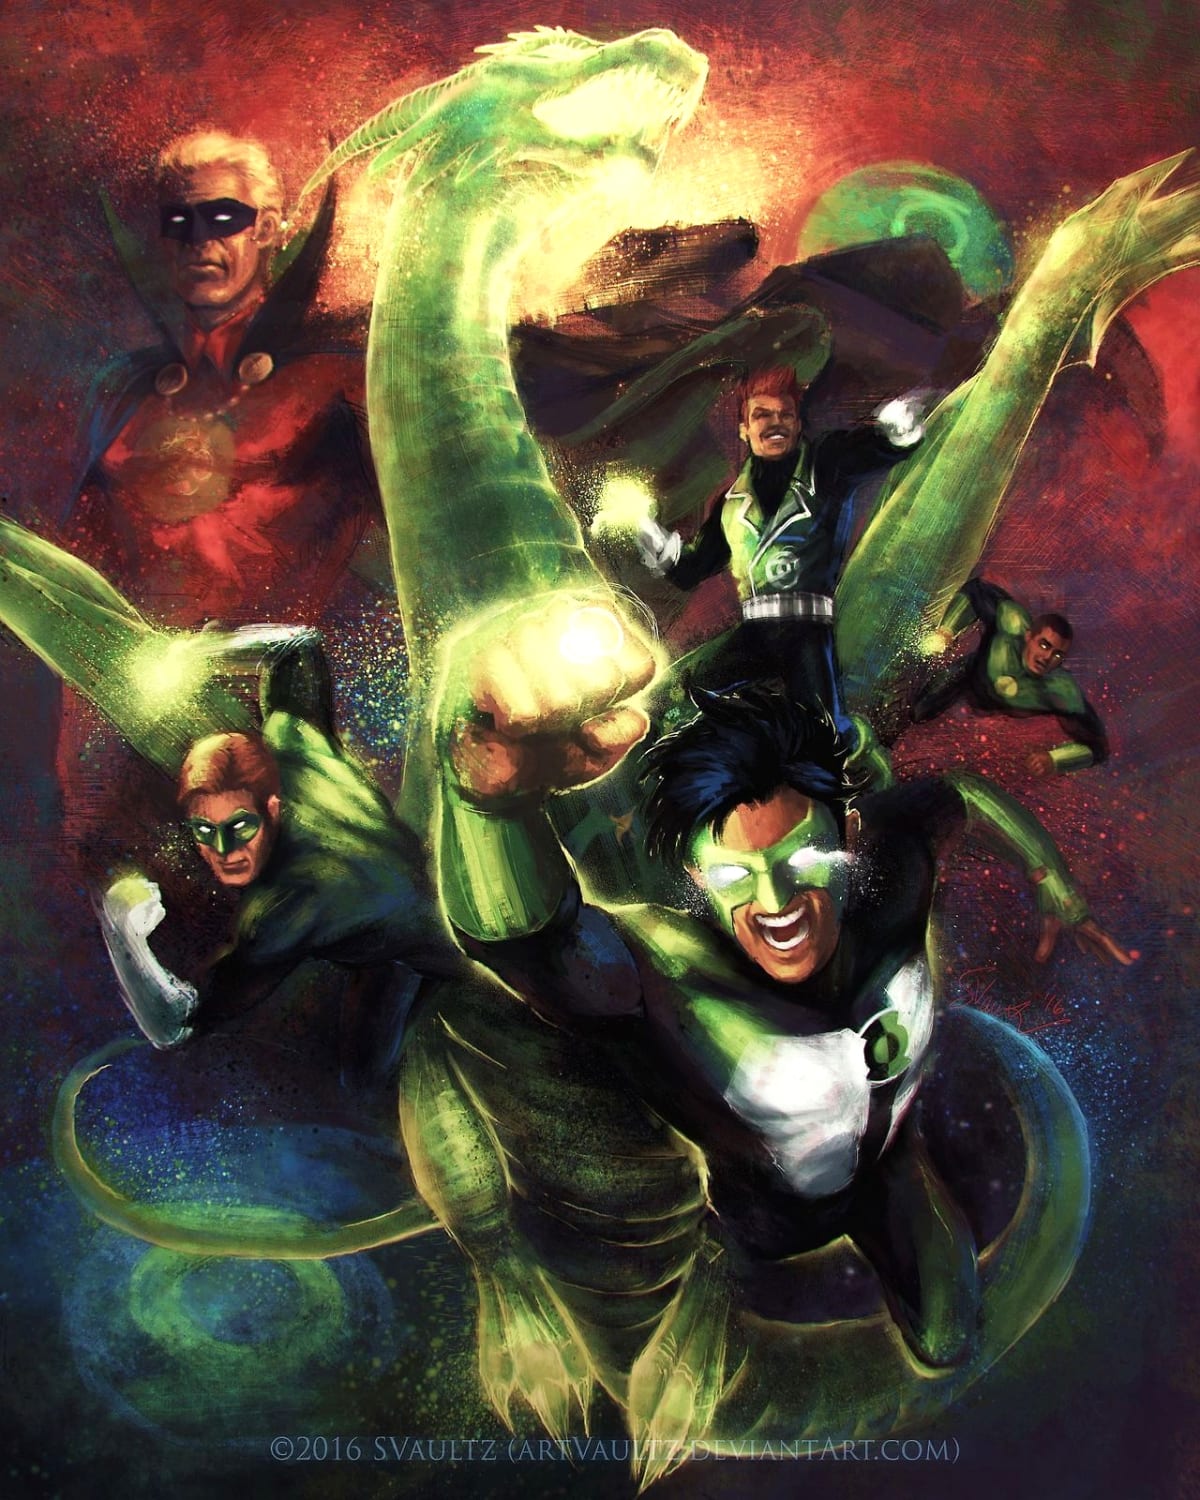 [Artwork] "Human Green Lantern Corps" by Svaultz